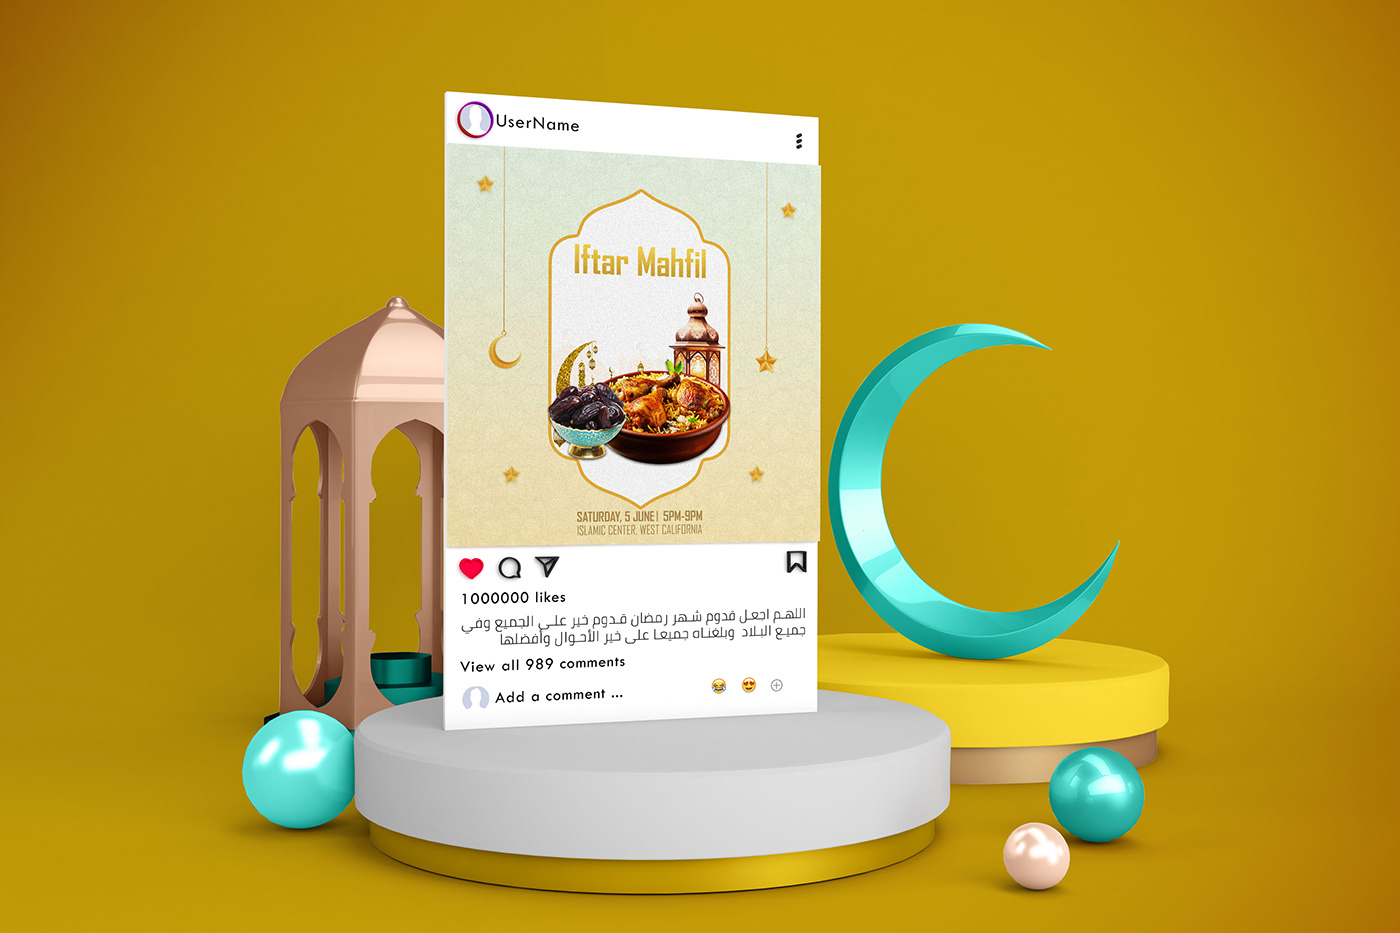 A Ramadan Kareem food Food Social Media Poster Design could feature a close-up photograph of a juicy